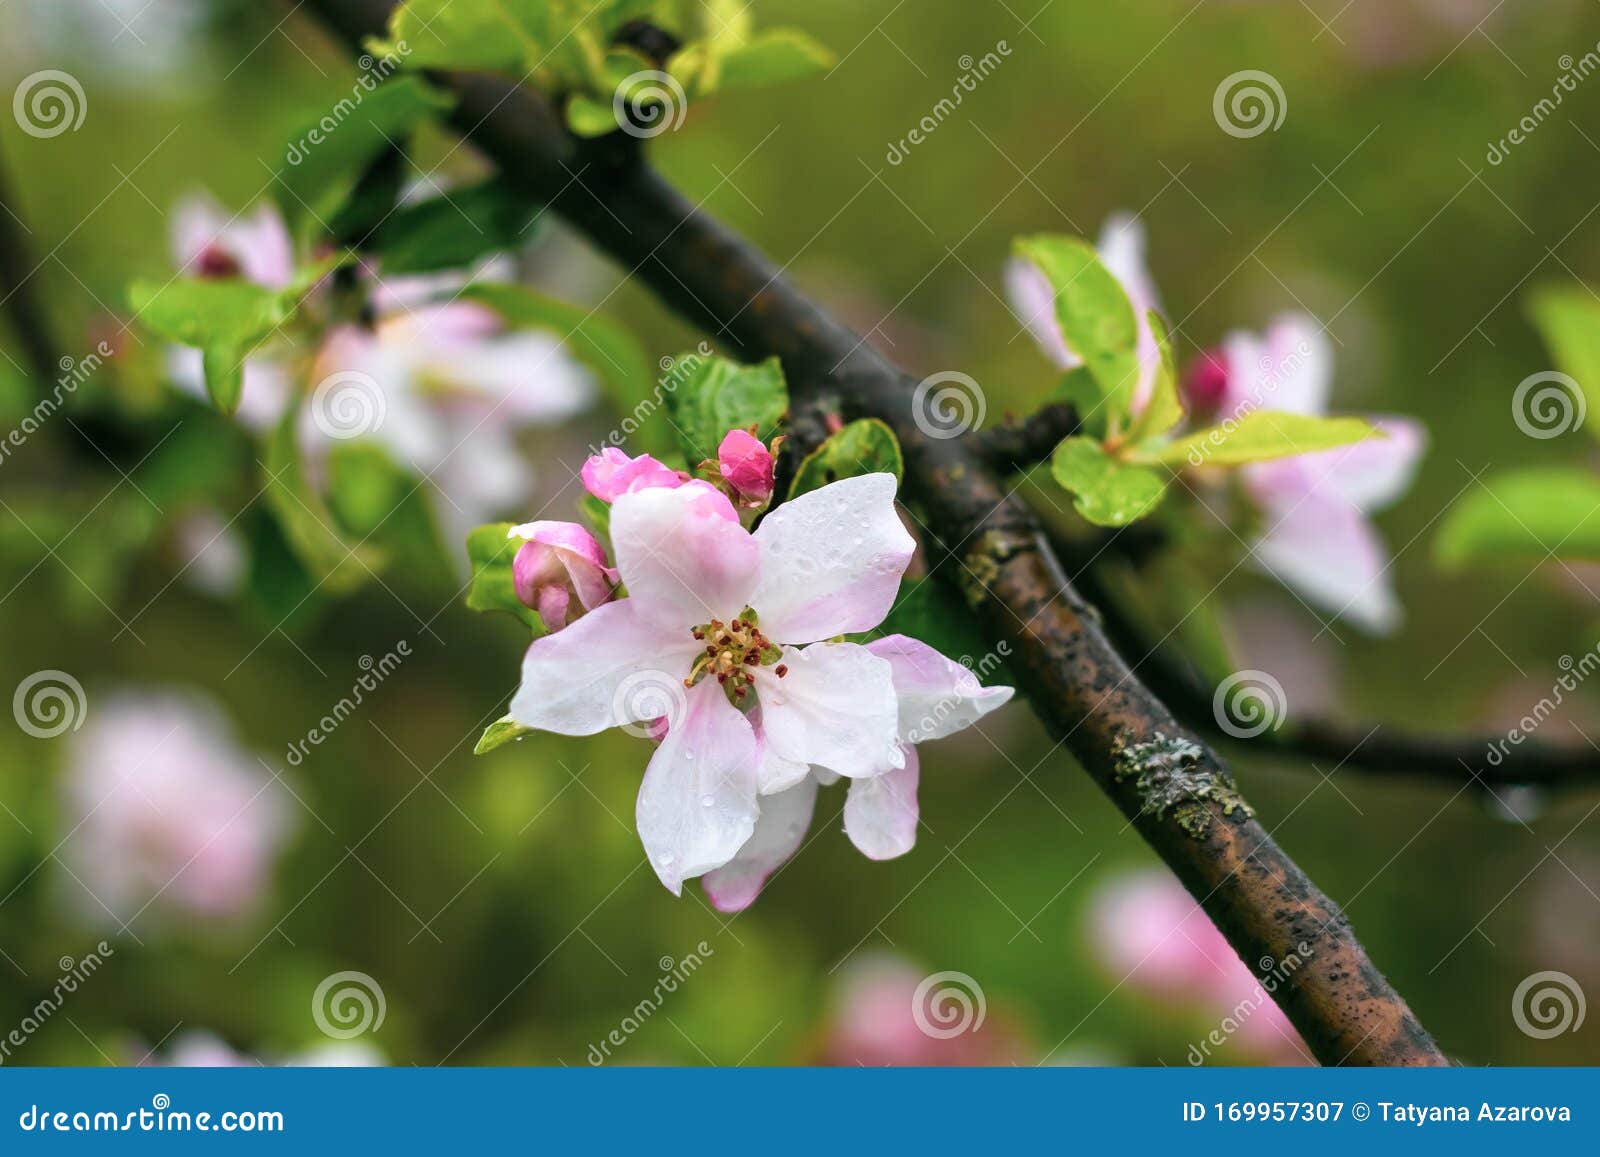 Blooming Apple Tree Branch Springtime Flower Background Blossom Garden Floral Wallpaper Stock Image Image Of Blossom Floral